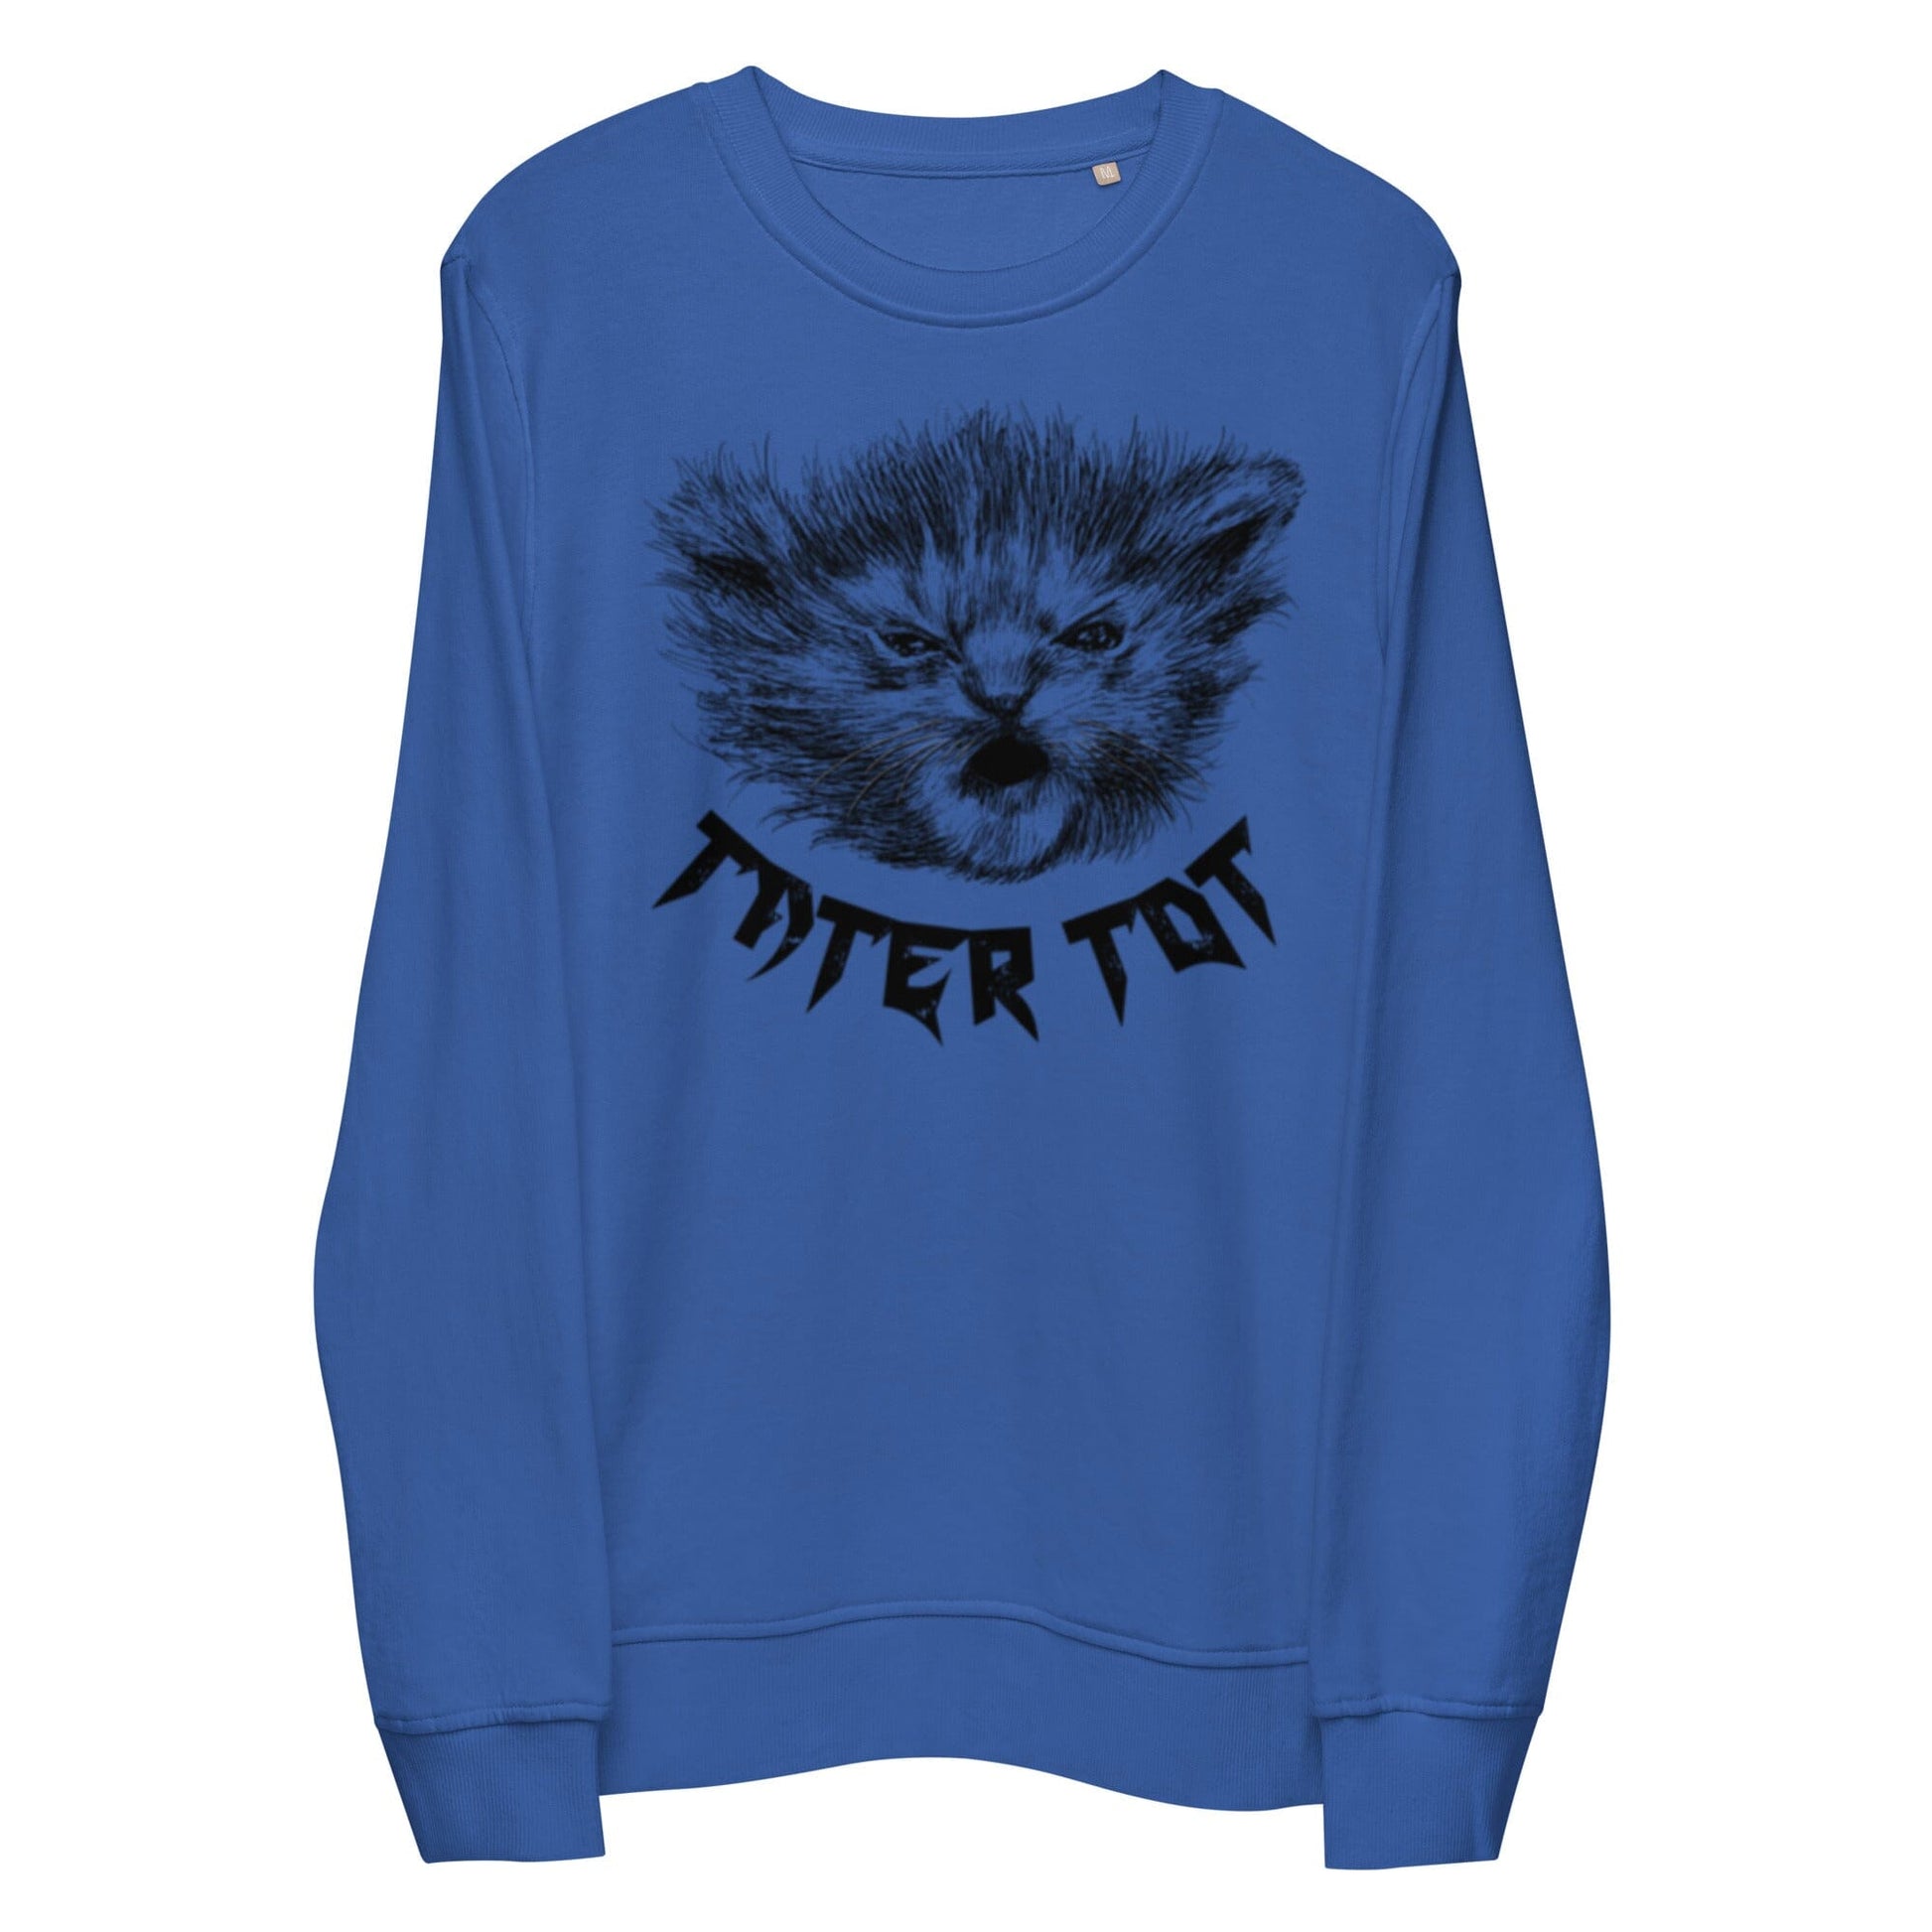 Metal Tater Tot Sweatshirt [Unfoiled] (All net proceeds go to Kitty CrusAIDe) JoyousJoyfulJoyness Royal Blue S 